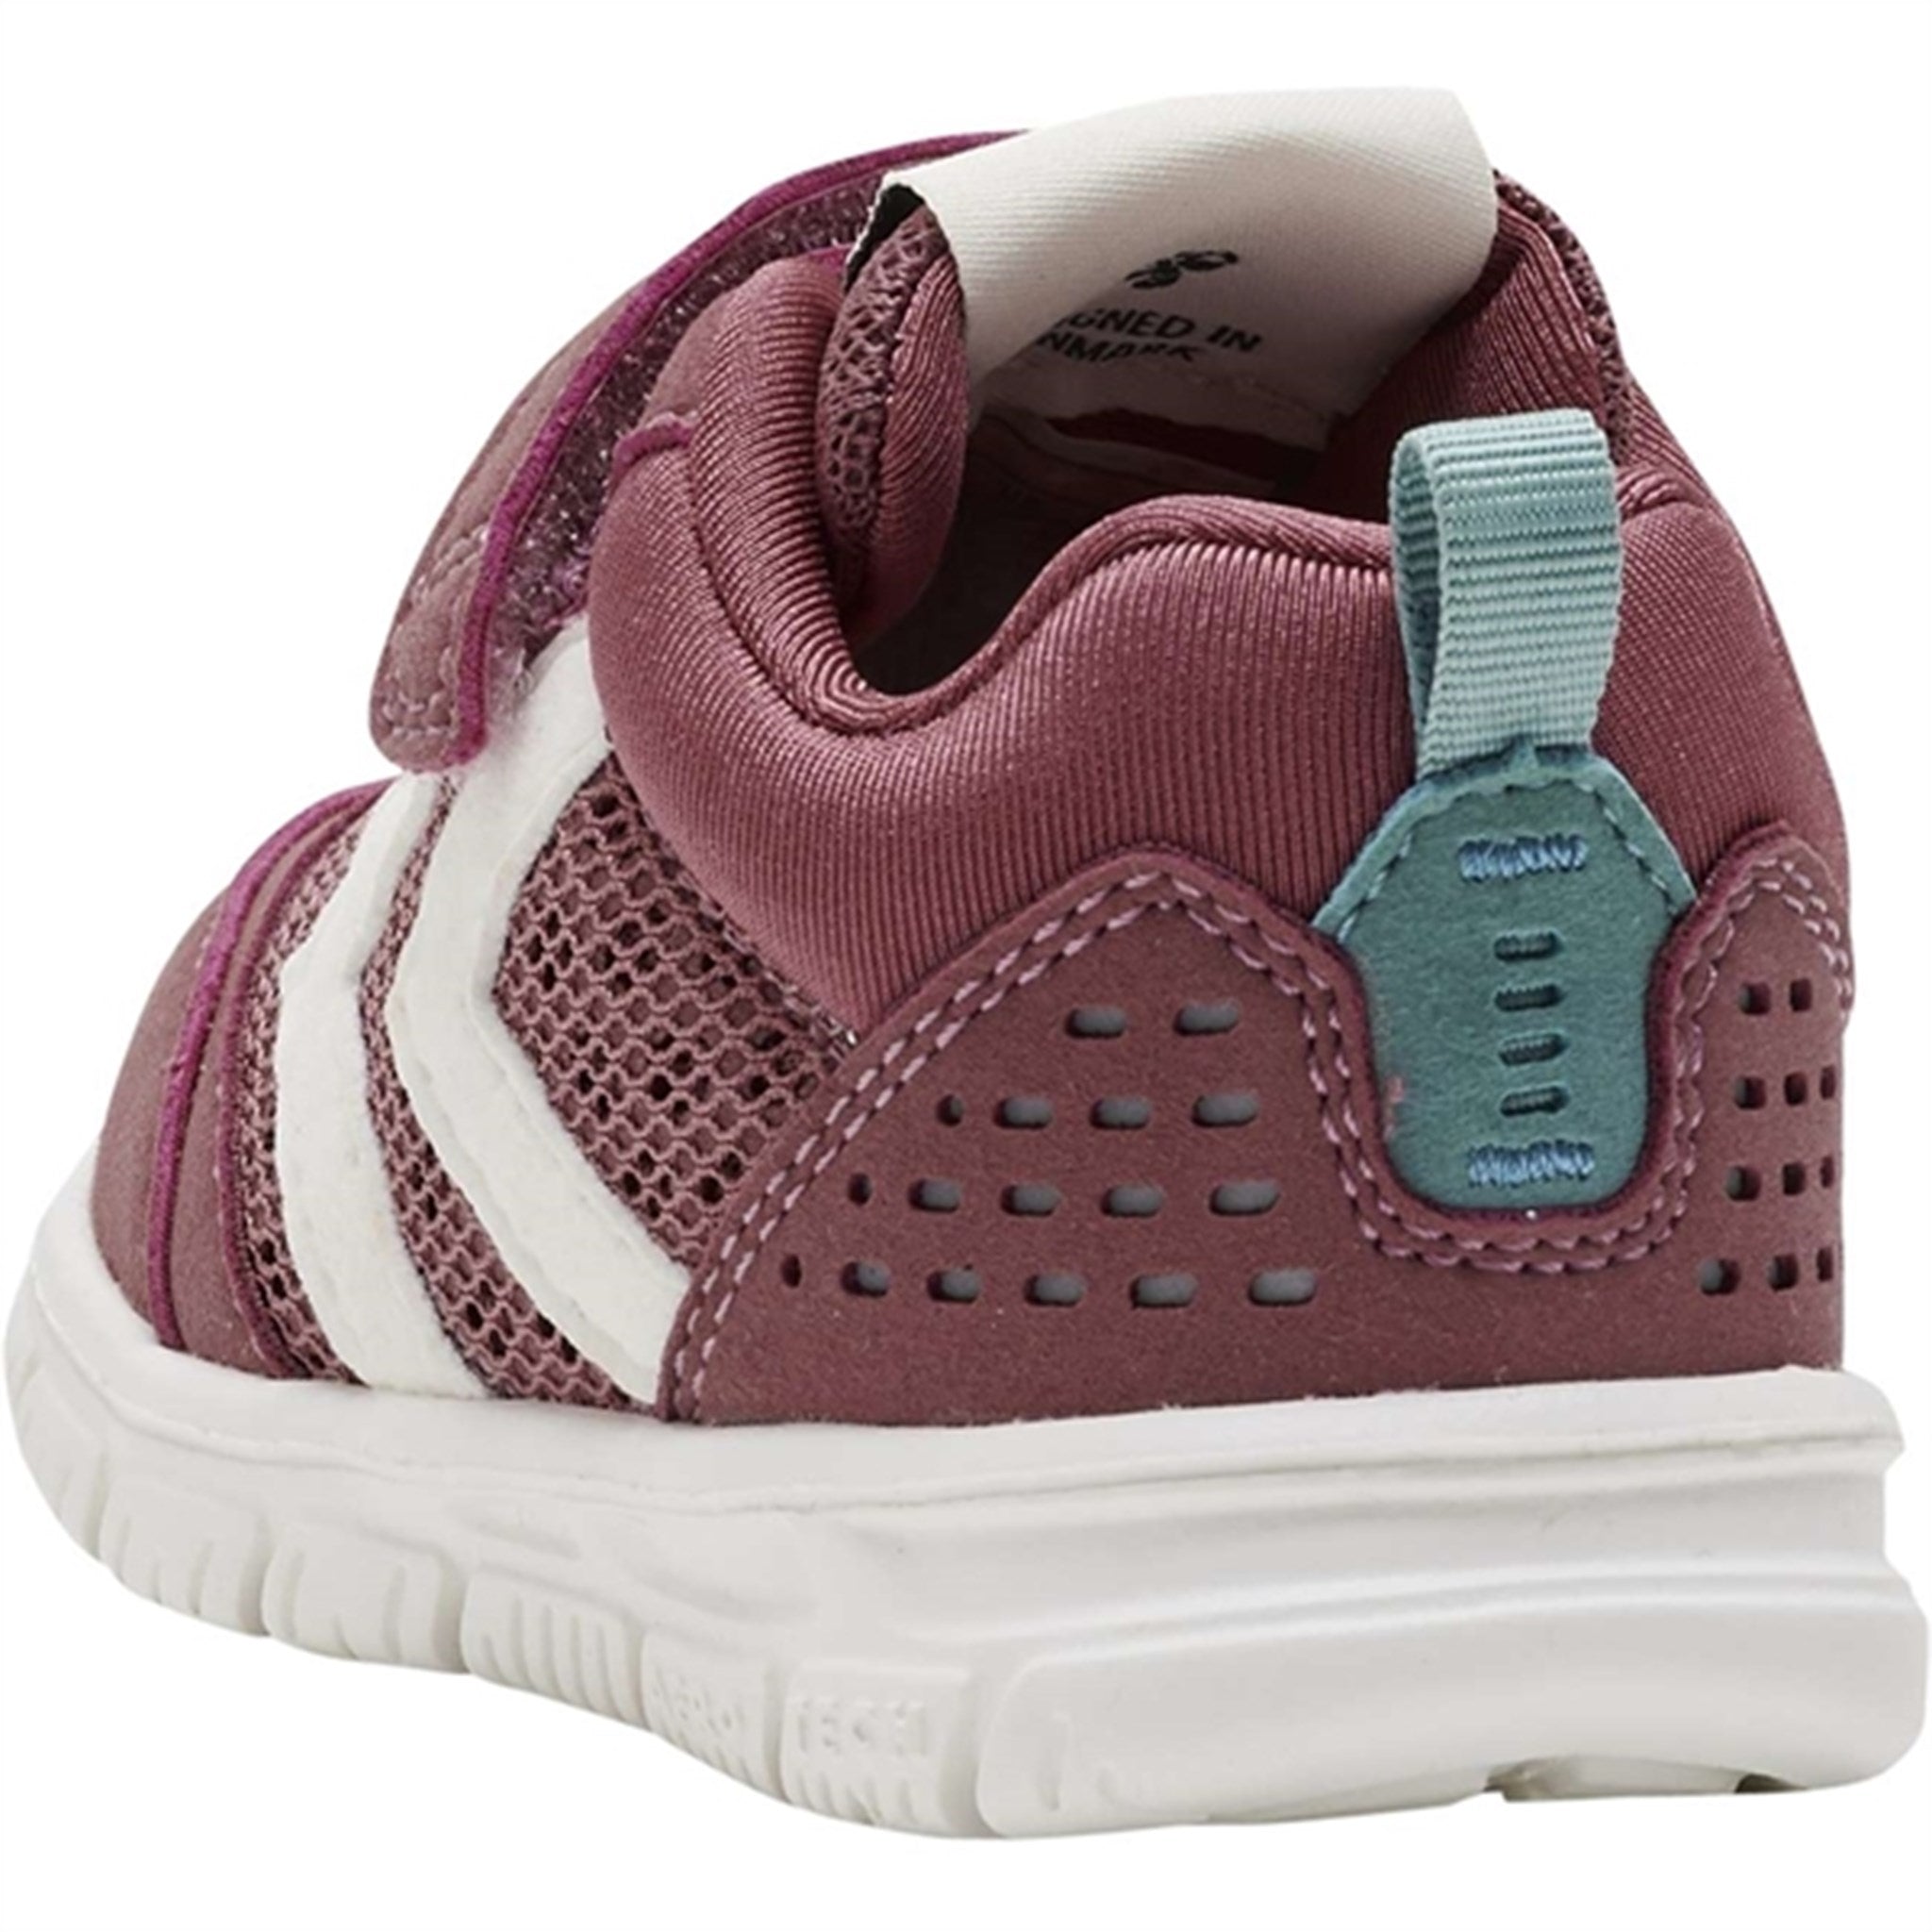 Hummel Crosslite Winter Infant Deco Rose Sneakers 3